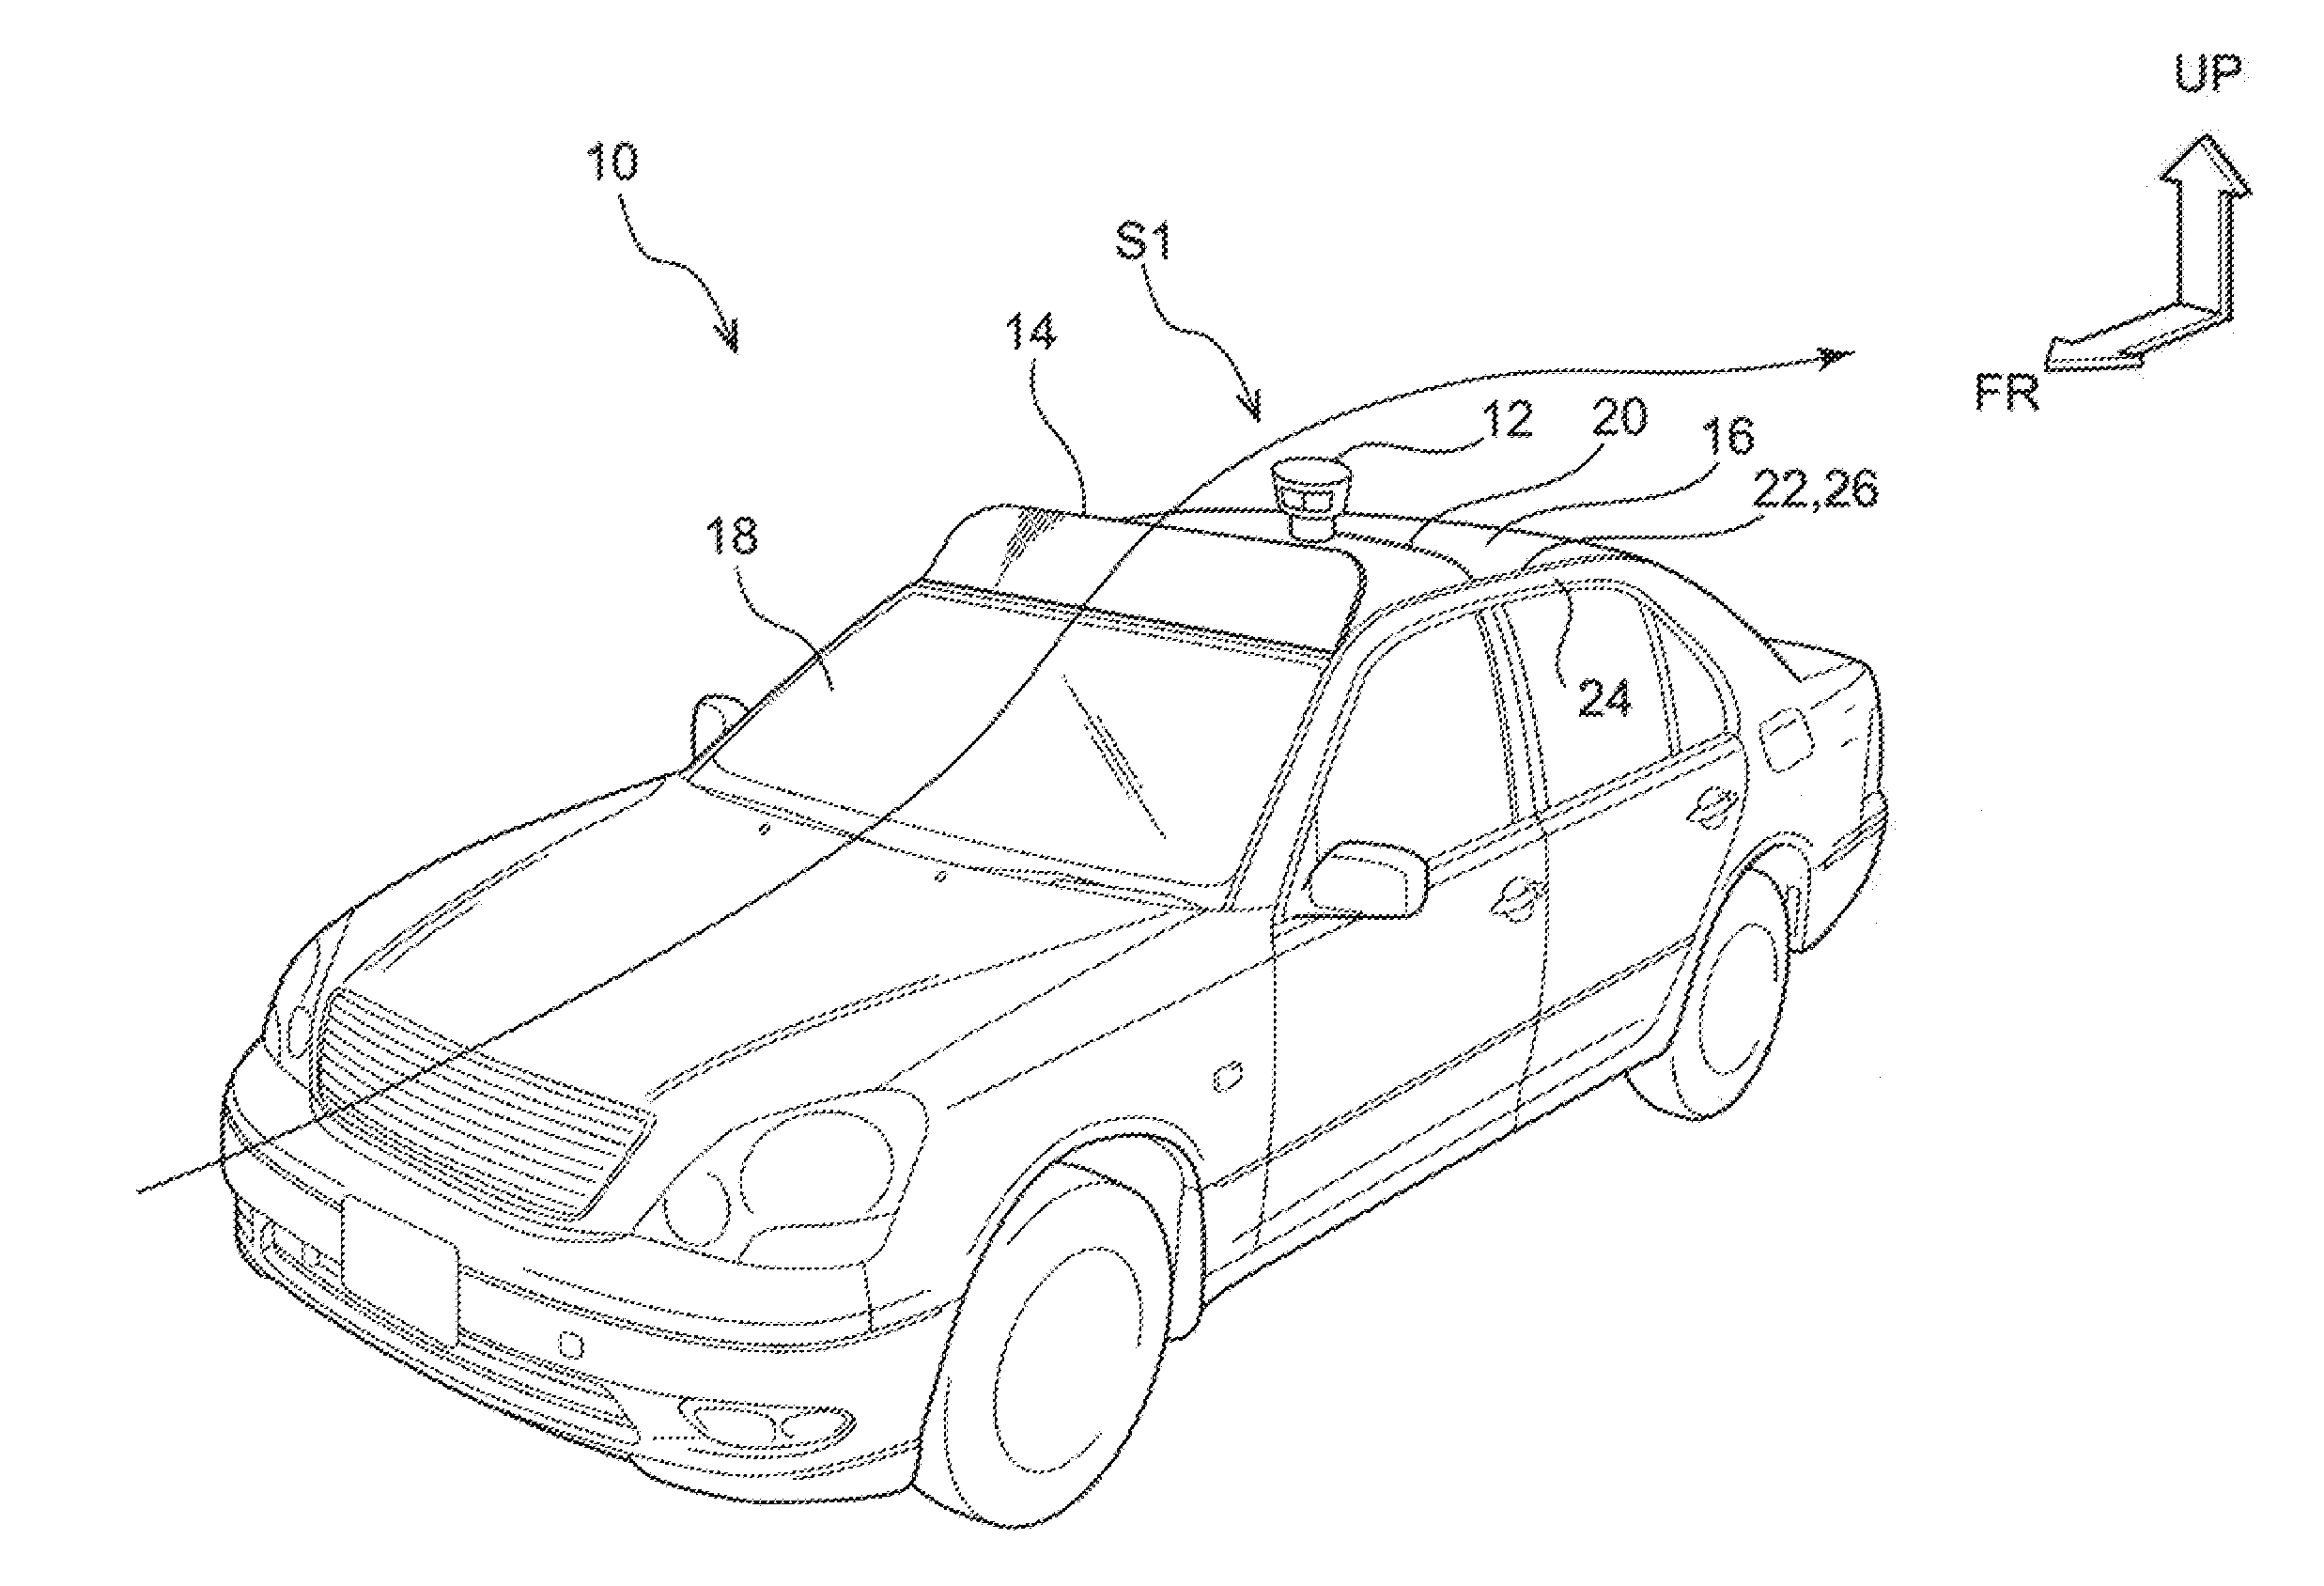 Vehicle flow-regulating structure